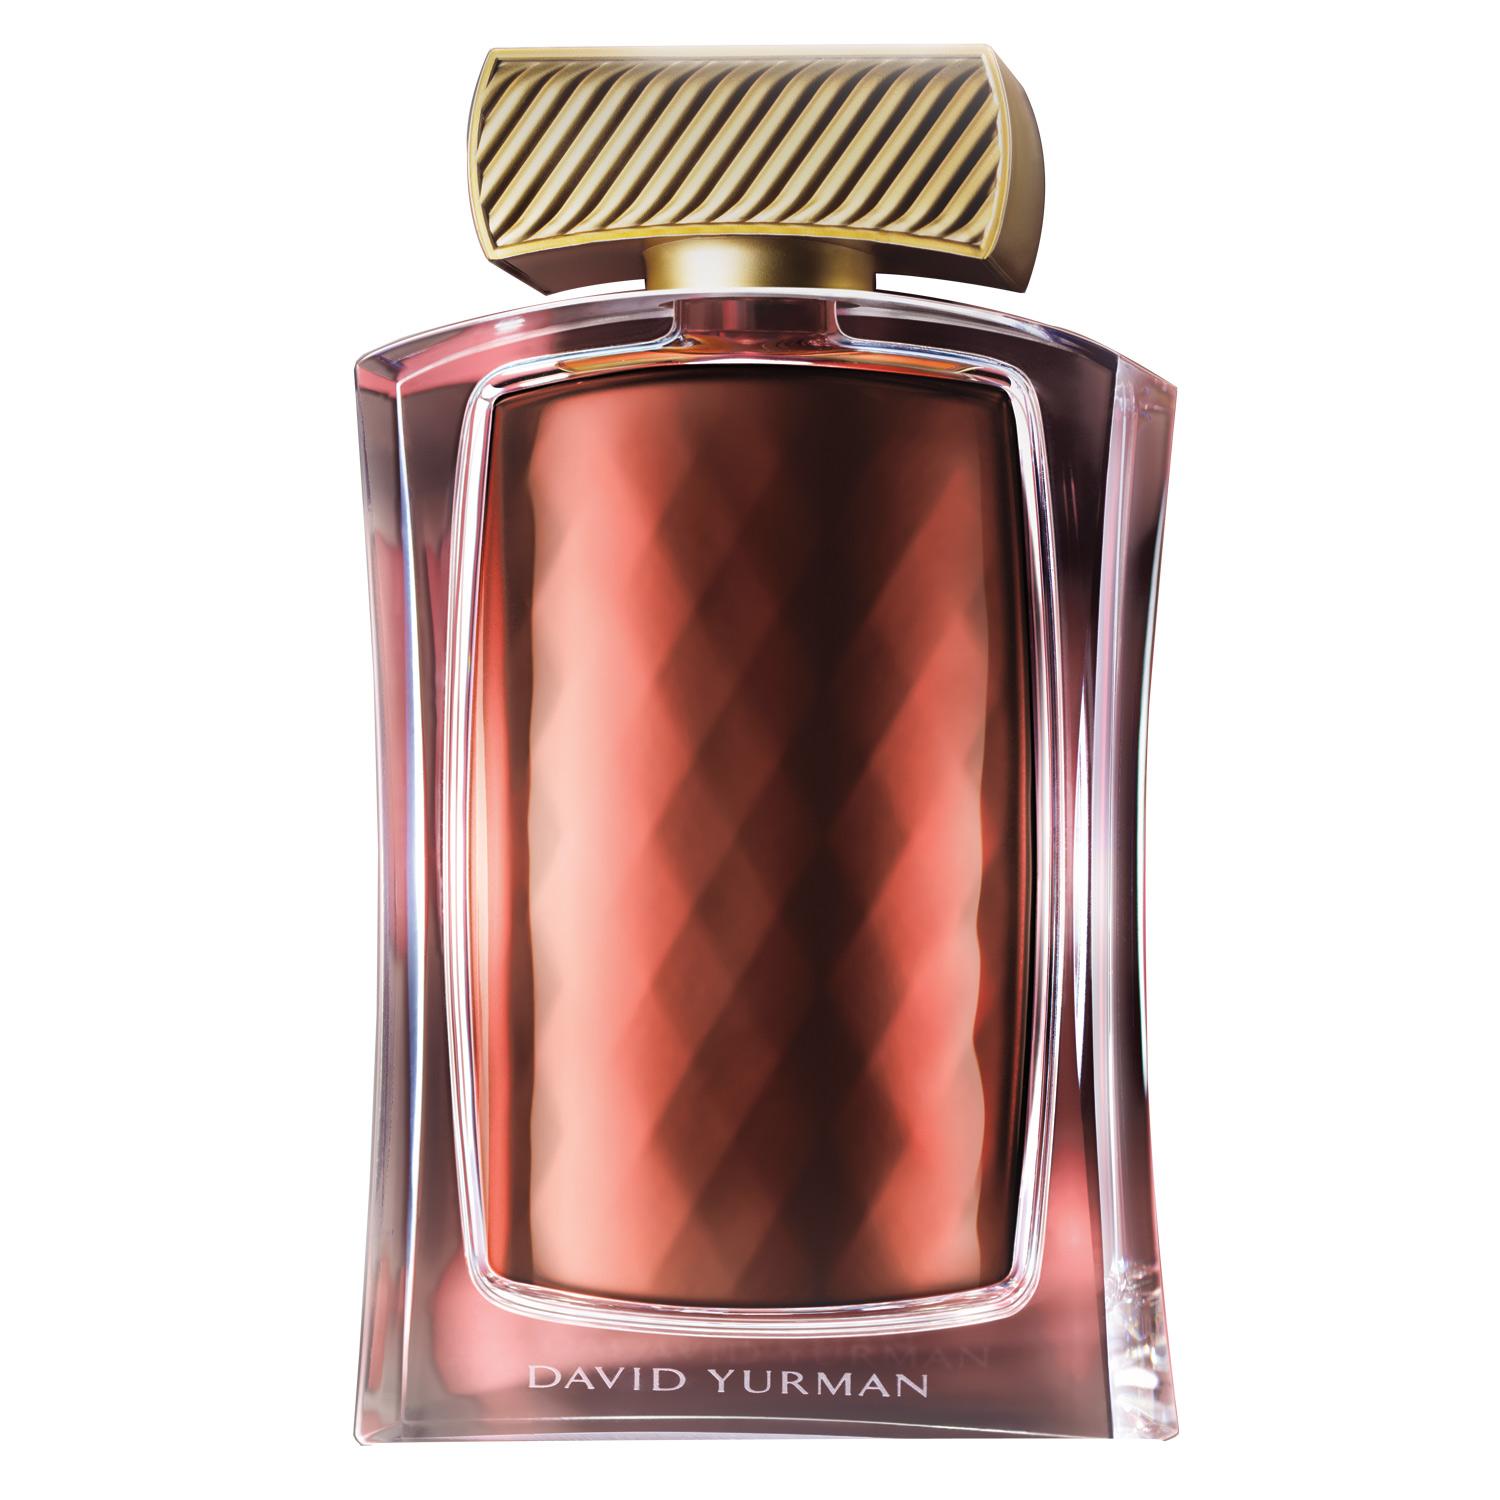 David Yurman David Yurman Limited Edition Extrait De Parfum